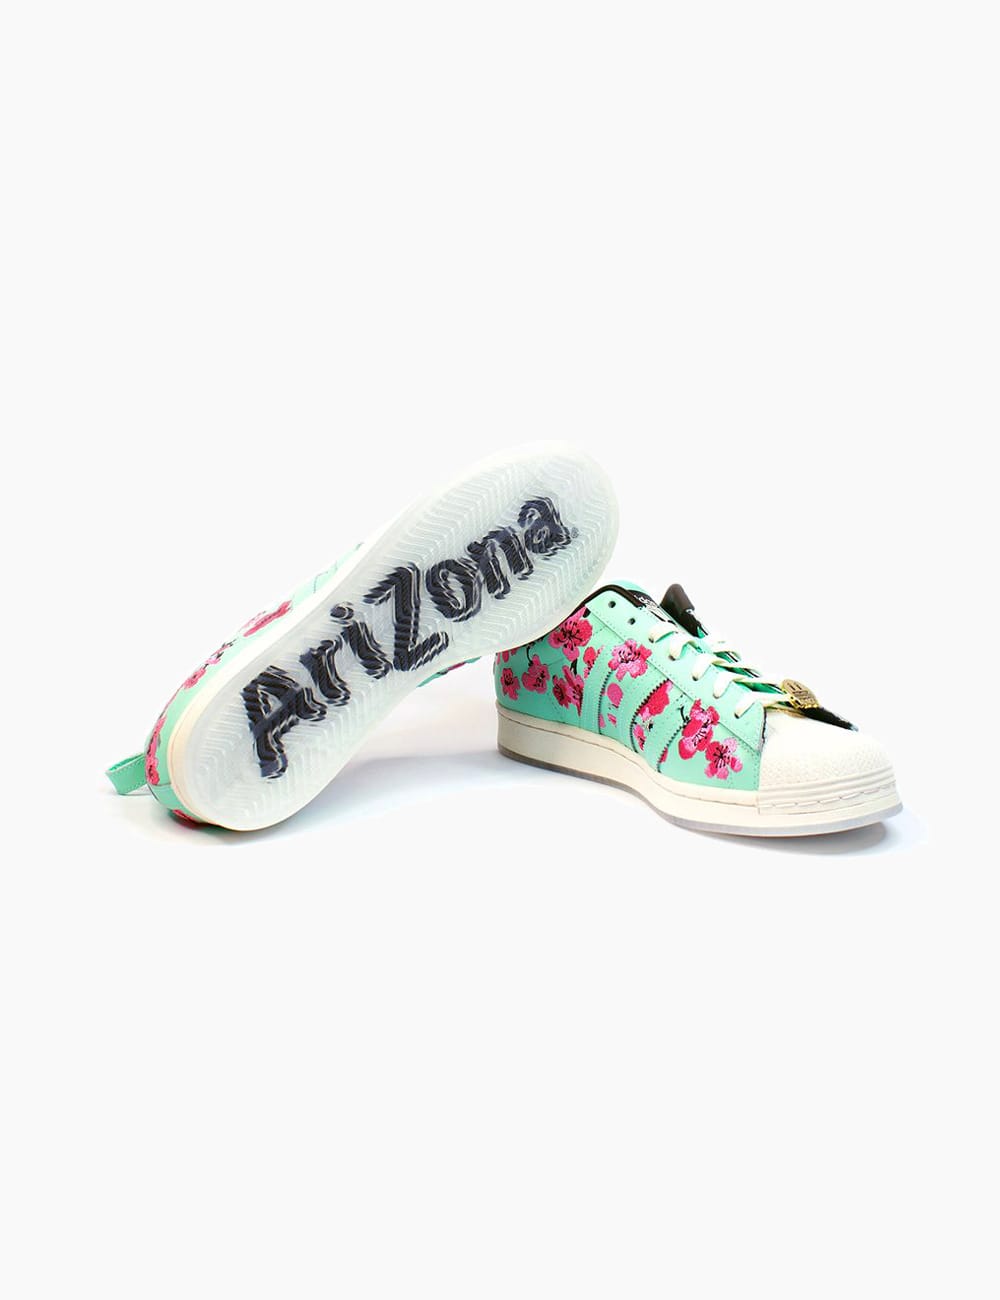 AriZona Ice Tea x adidas Originals 